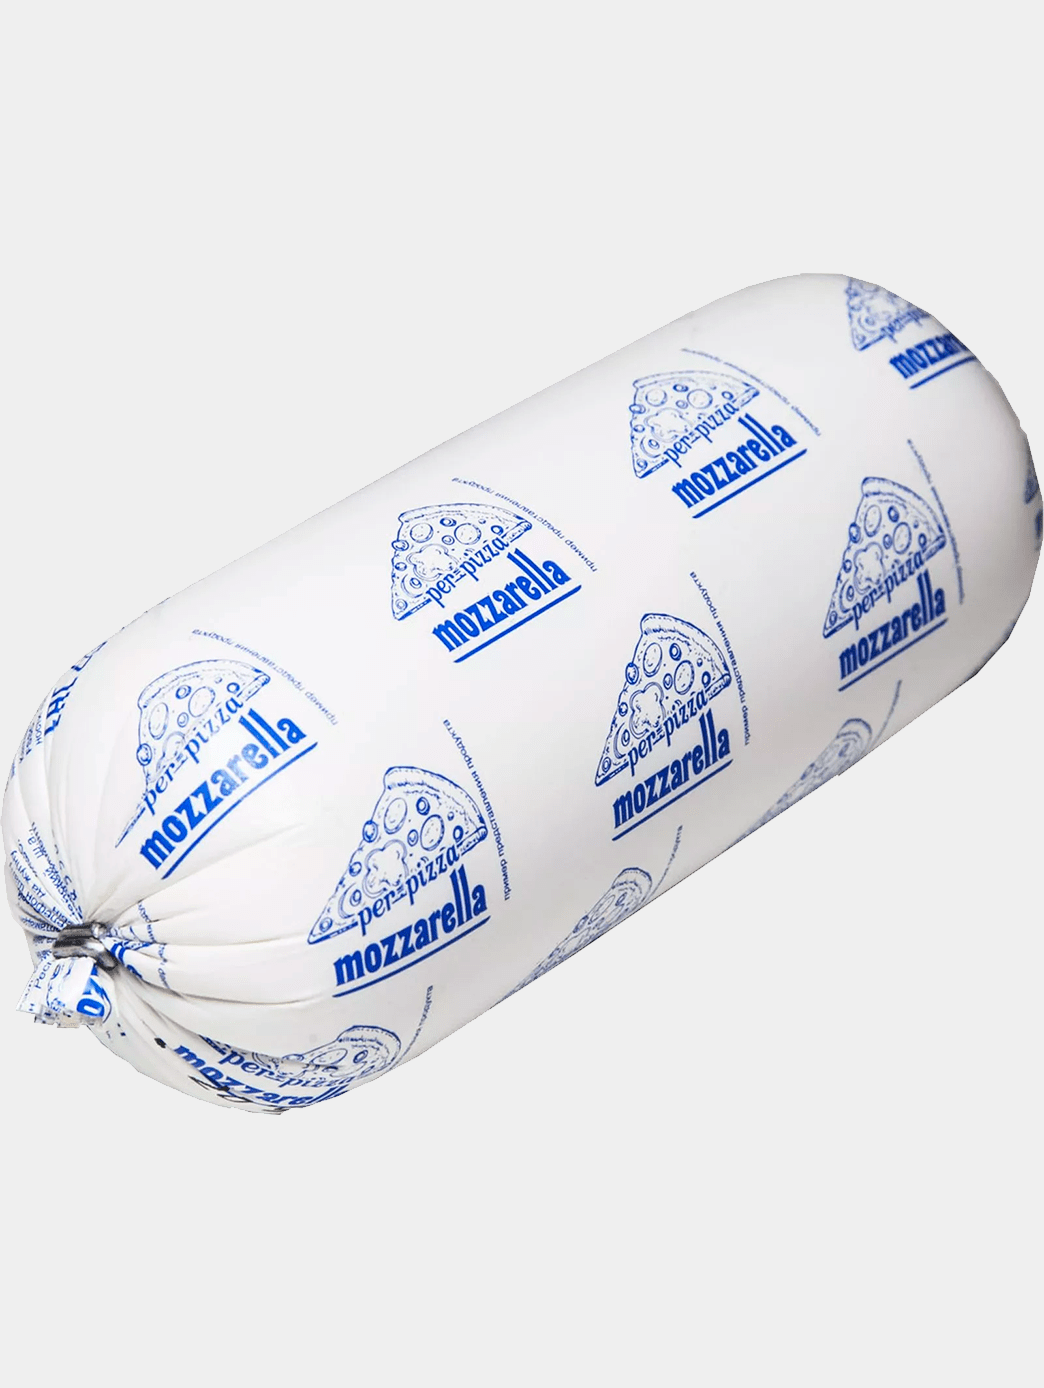 225 сырный продукт Mozarella (батон) 1 кг Барнаул